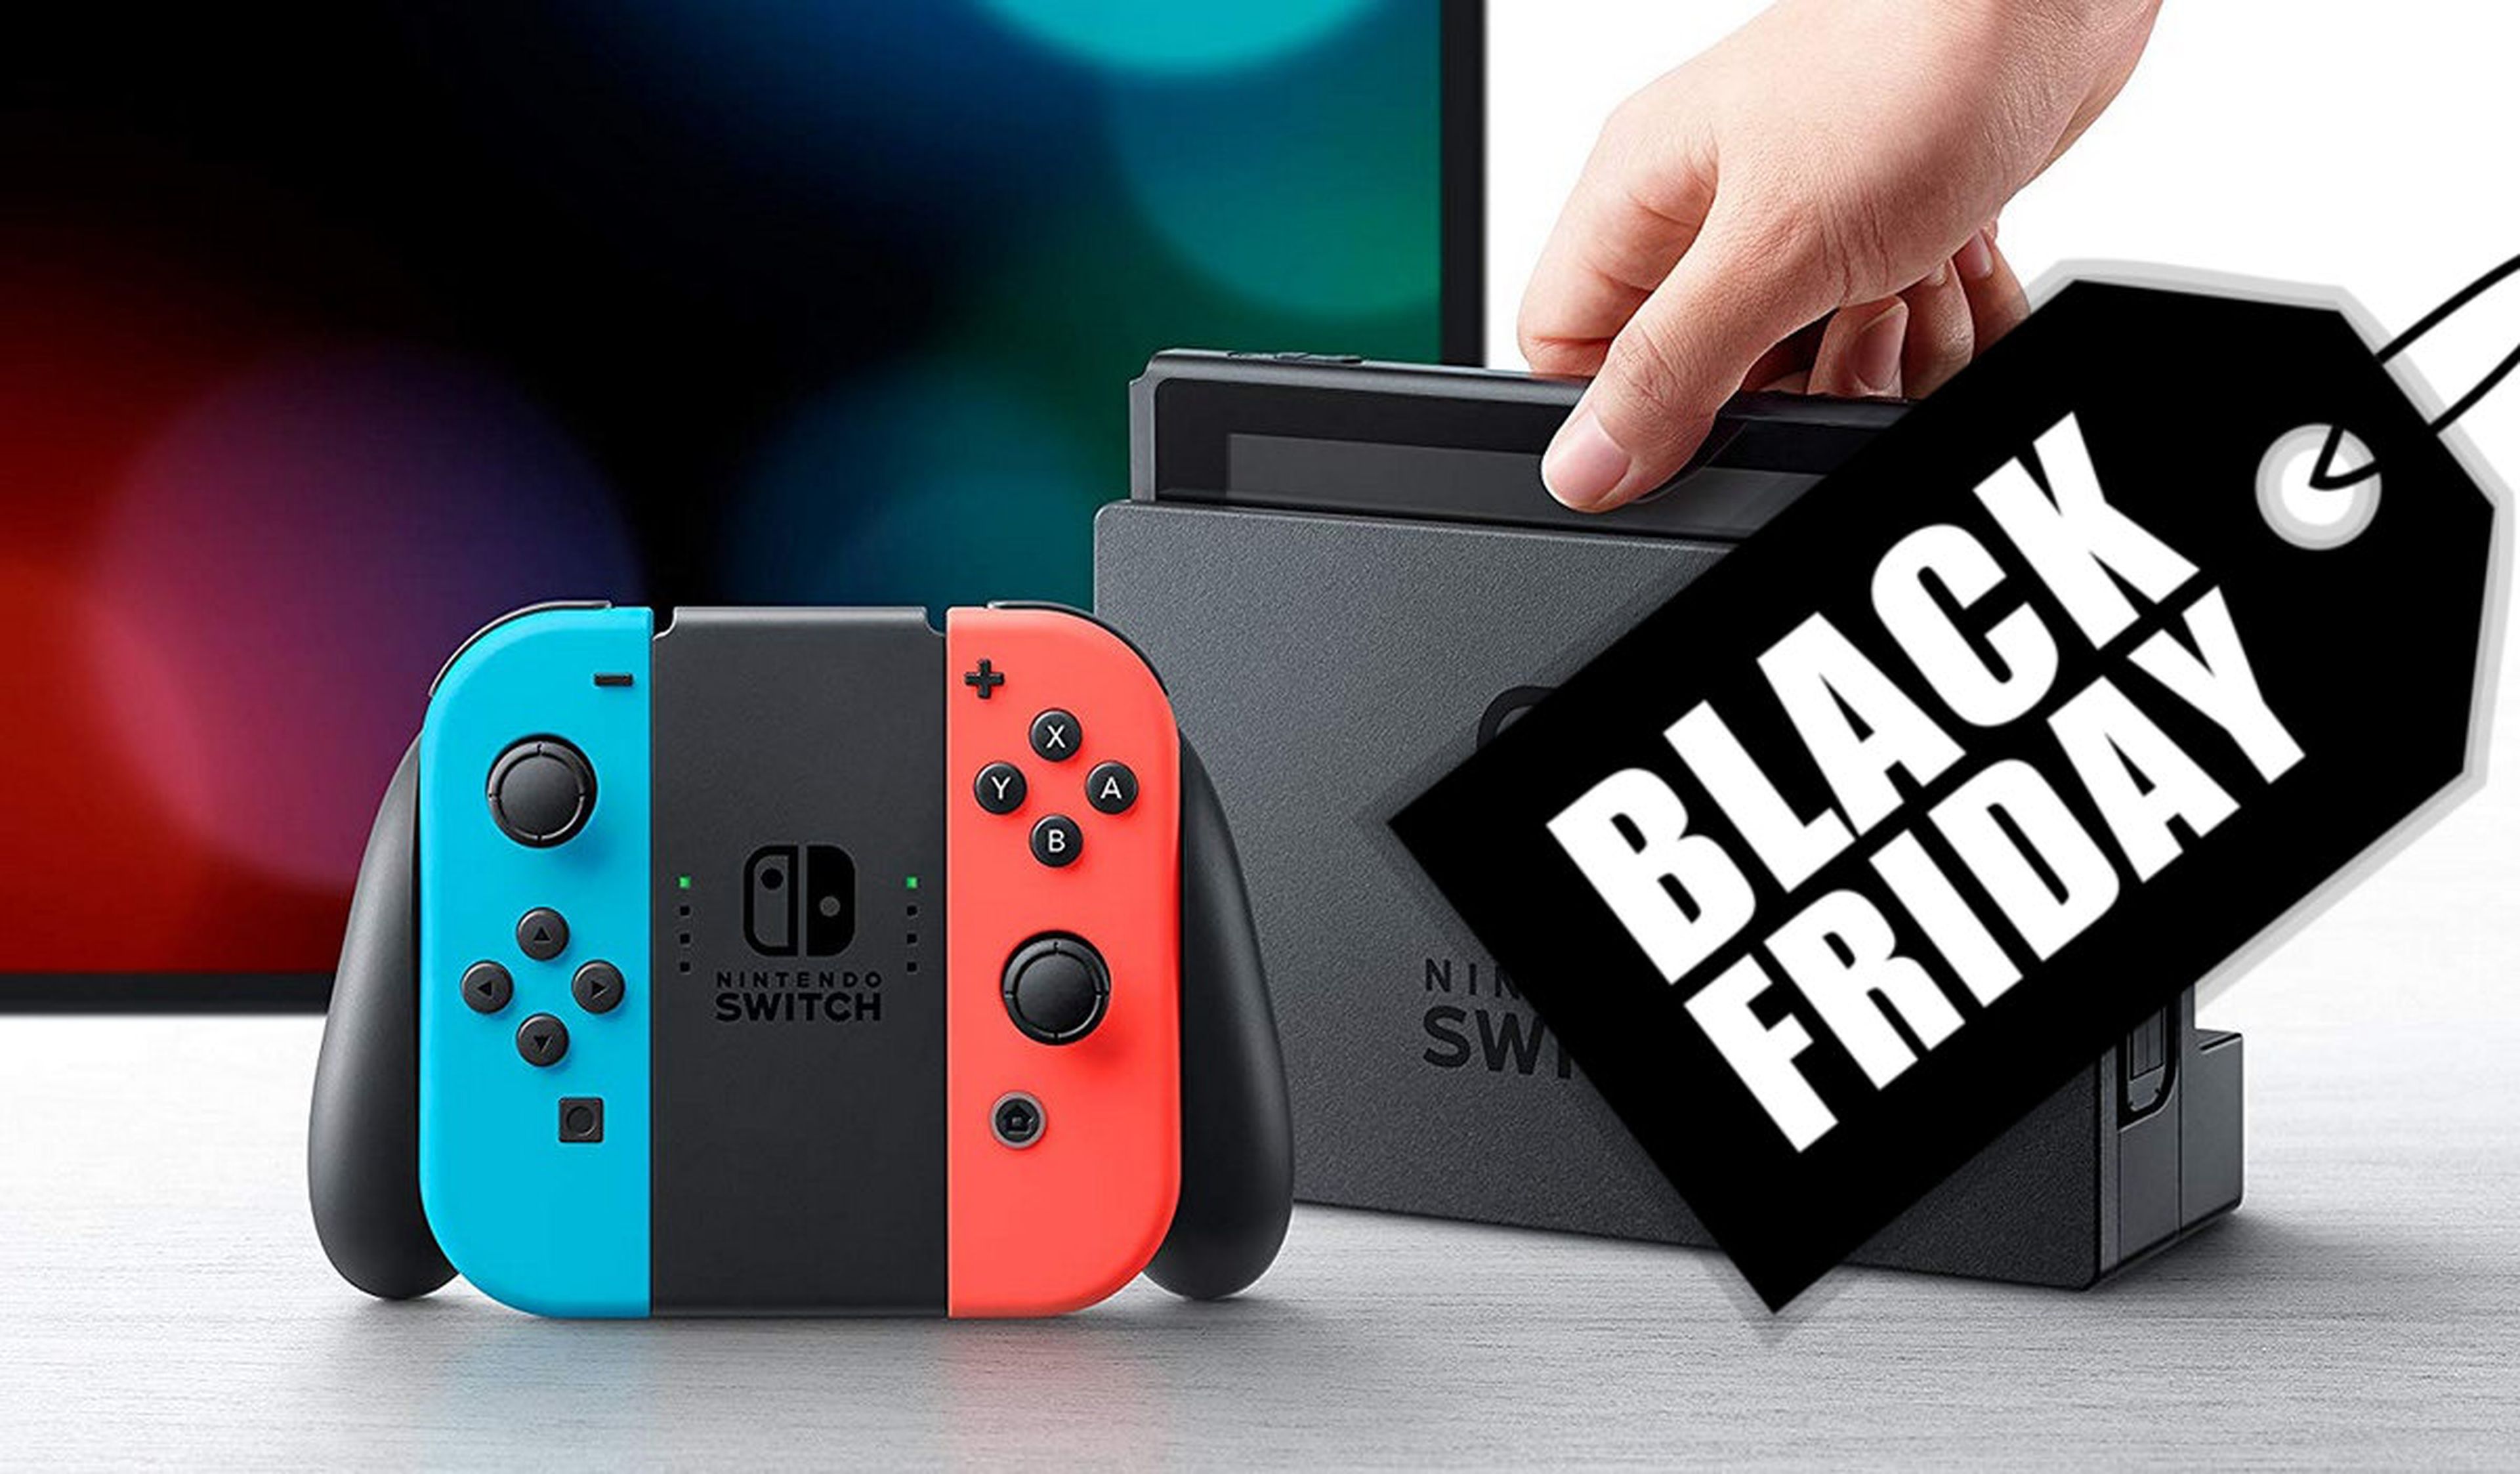 Nintendo Switch Black Friday